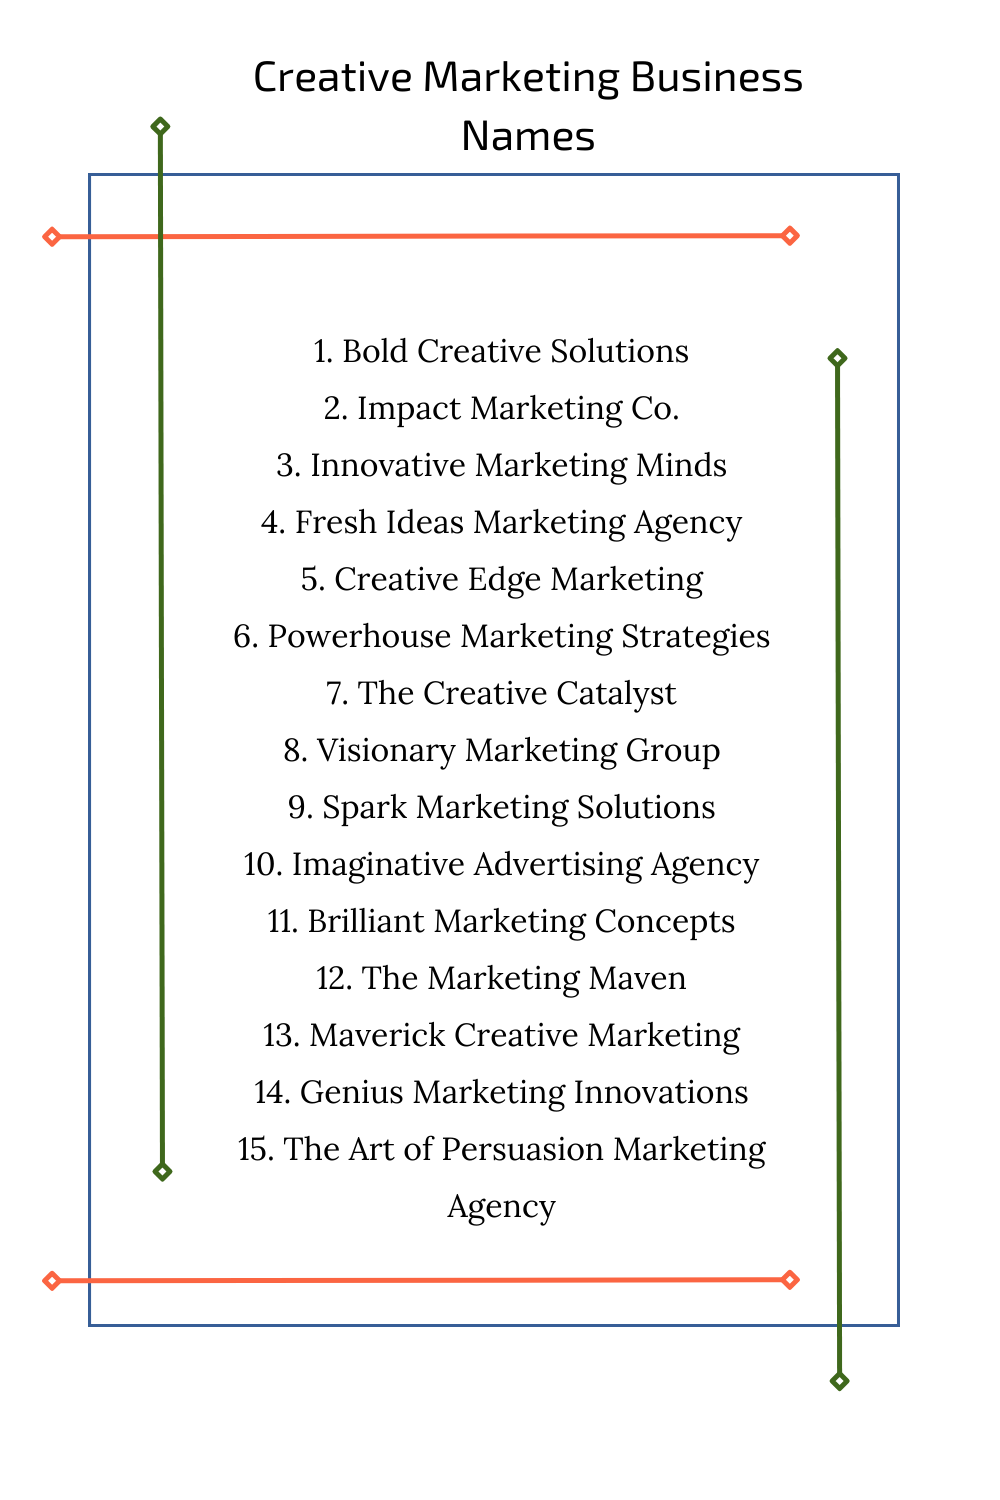 Creative Marketing Business Names